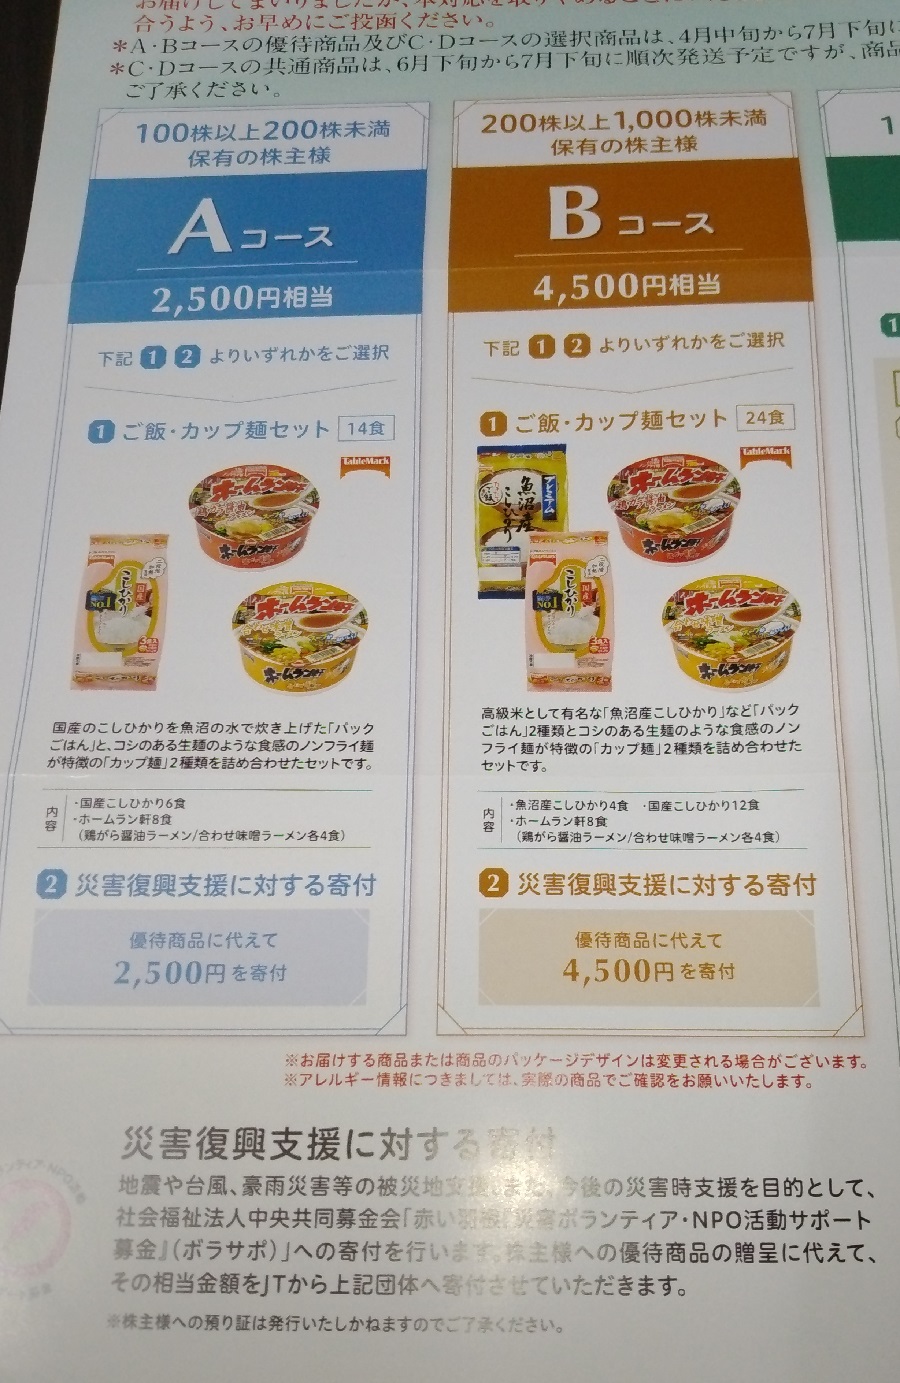 63%OFF!】 JT 株主優待商品 カップ麺とレトルトご飯